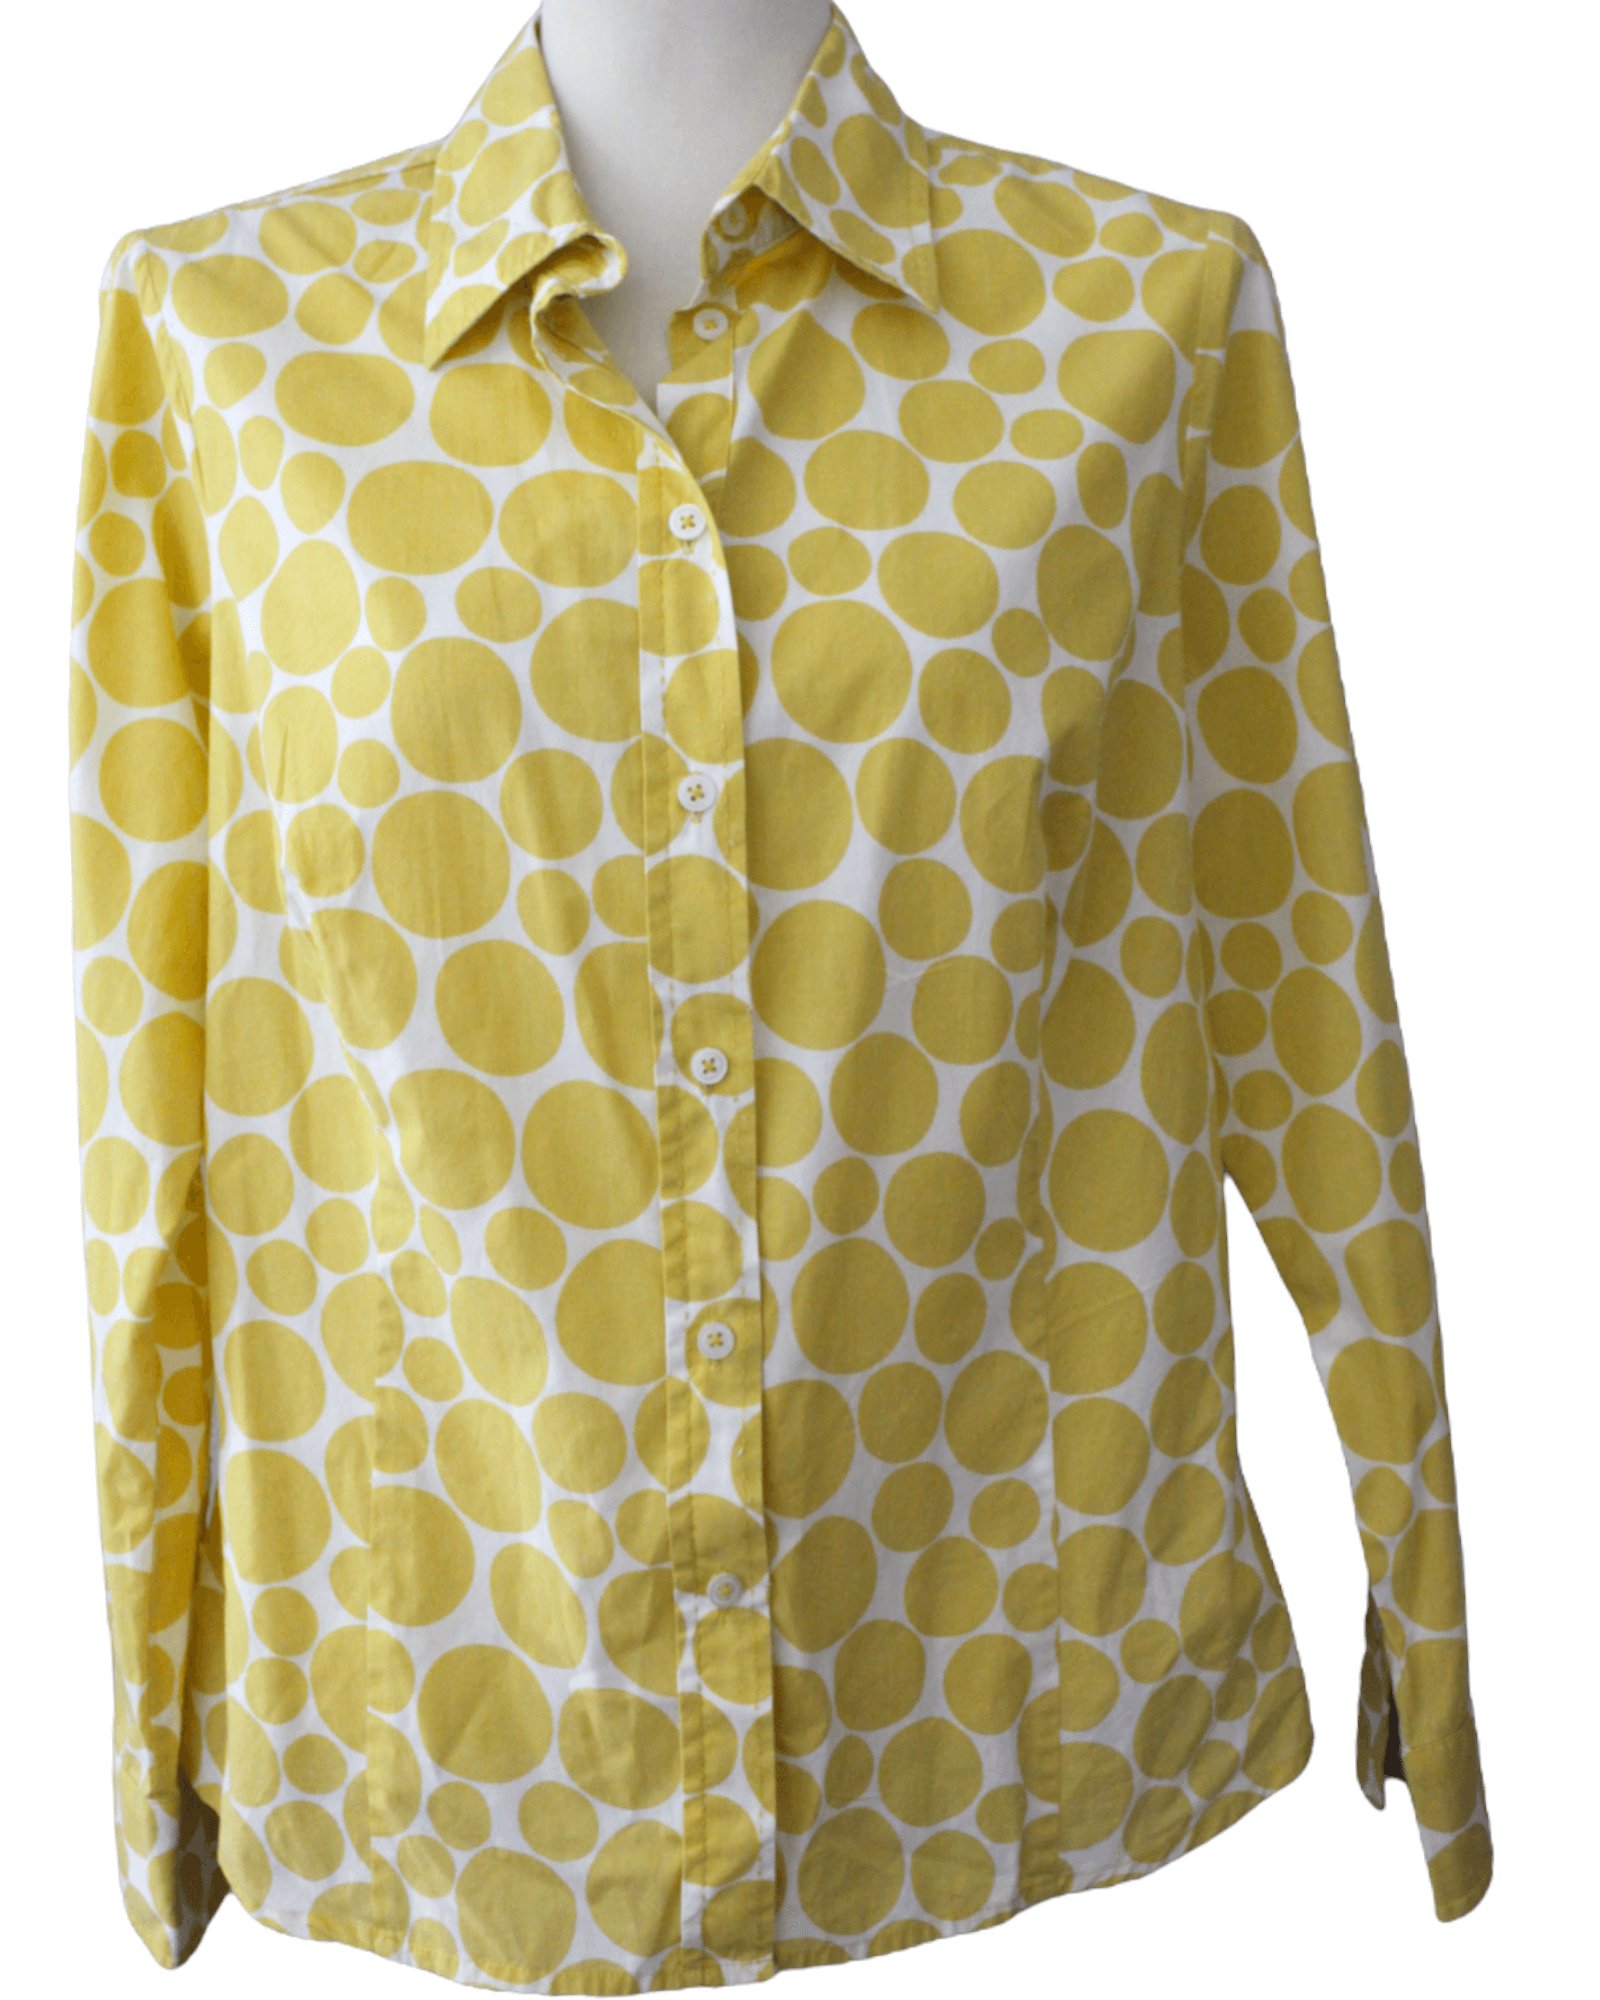 Warm Spring BODEN yellow dot shirt